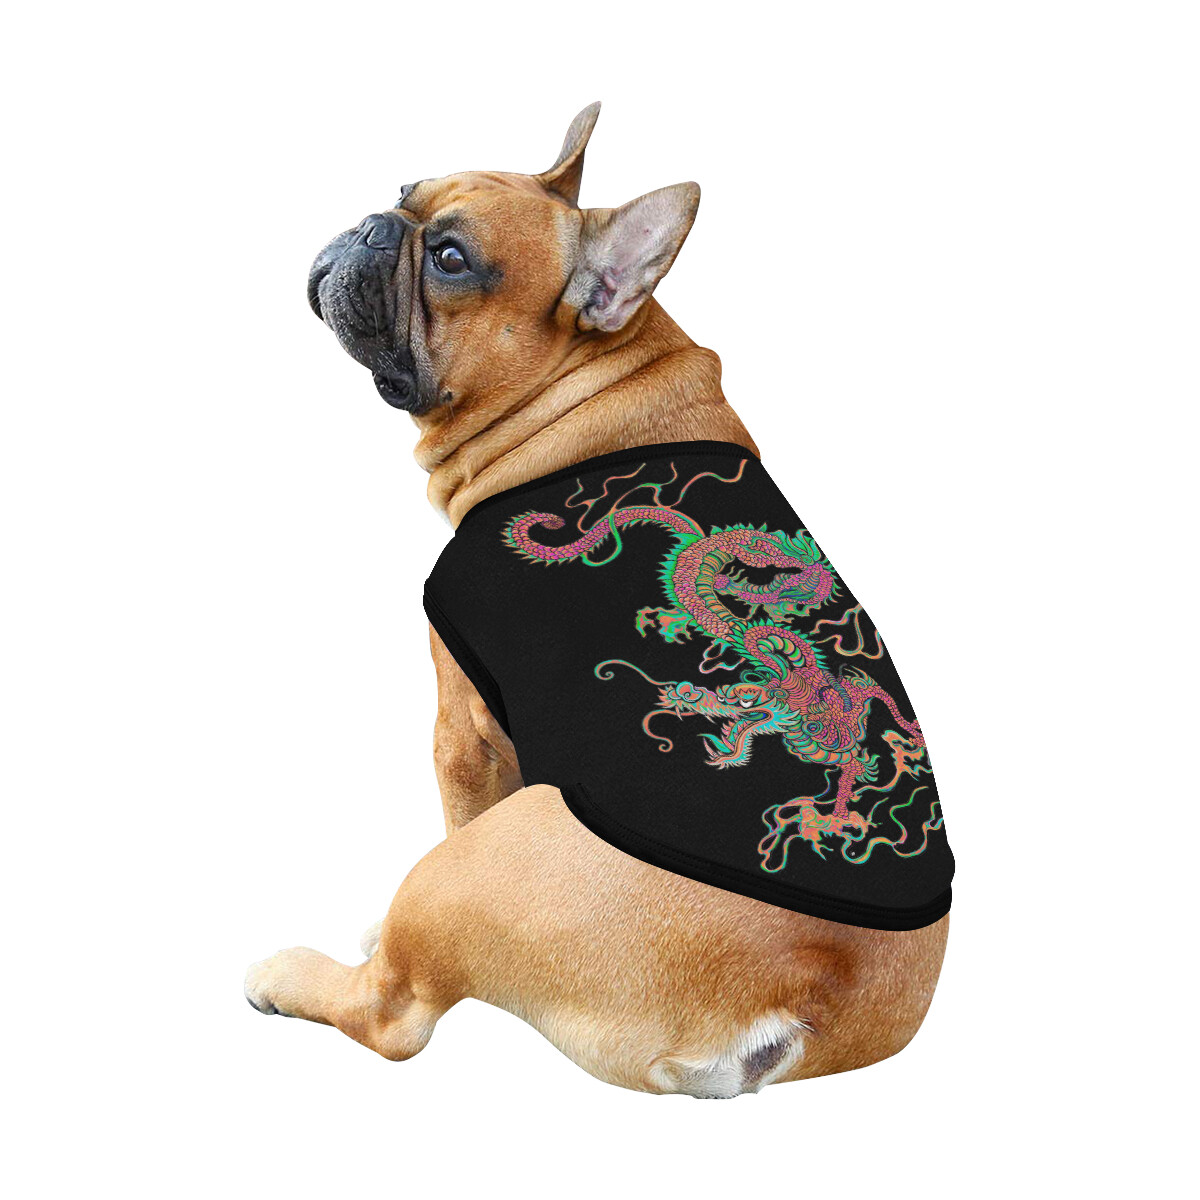 🐕🐉 Maru's Feilong Chinese Flying Dragon Dog shirt, Dog Tank Top, Dog t-shirt, Dog clothes, Gift, 7 sizes XS to 3XL, dog gifts, 50 colors, black